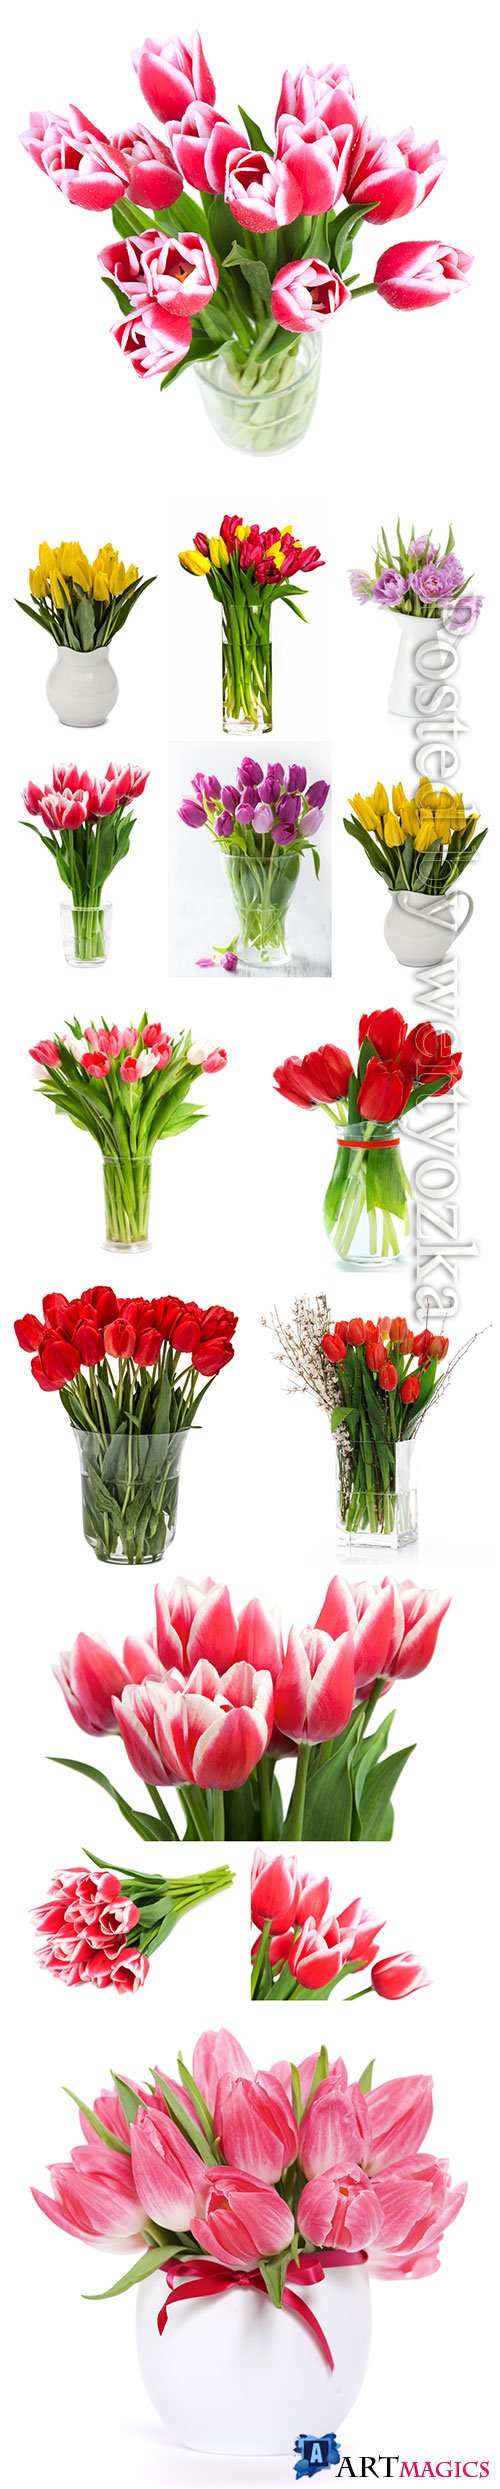 Beautiful tulips in vases stock photo